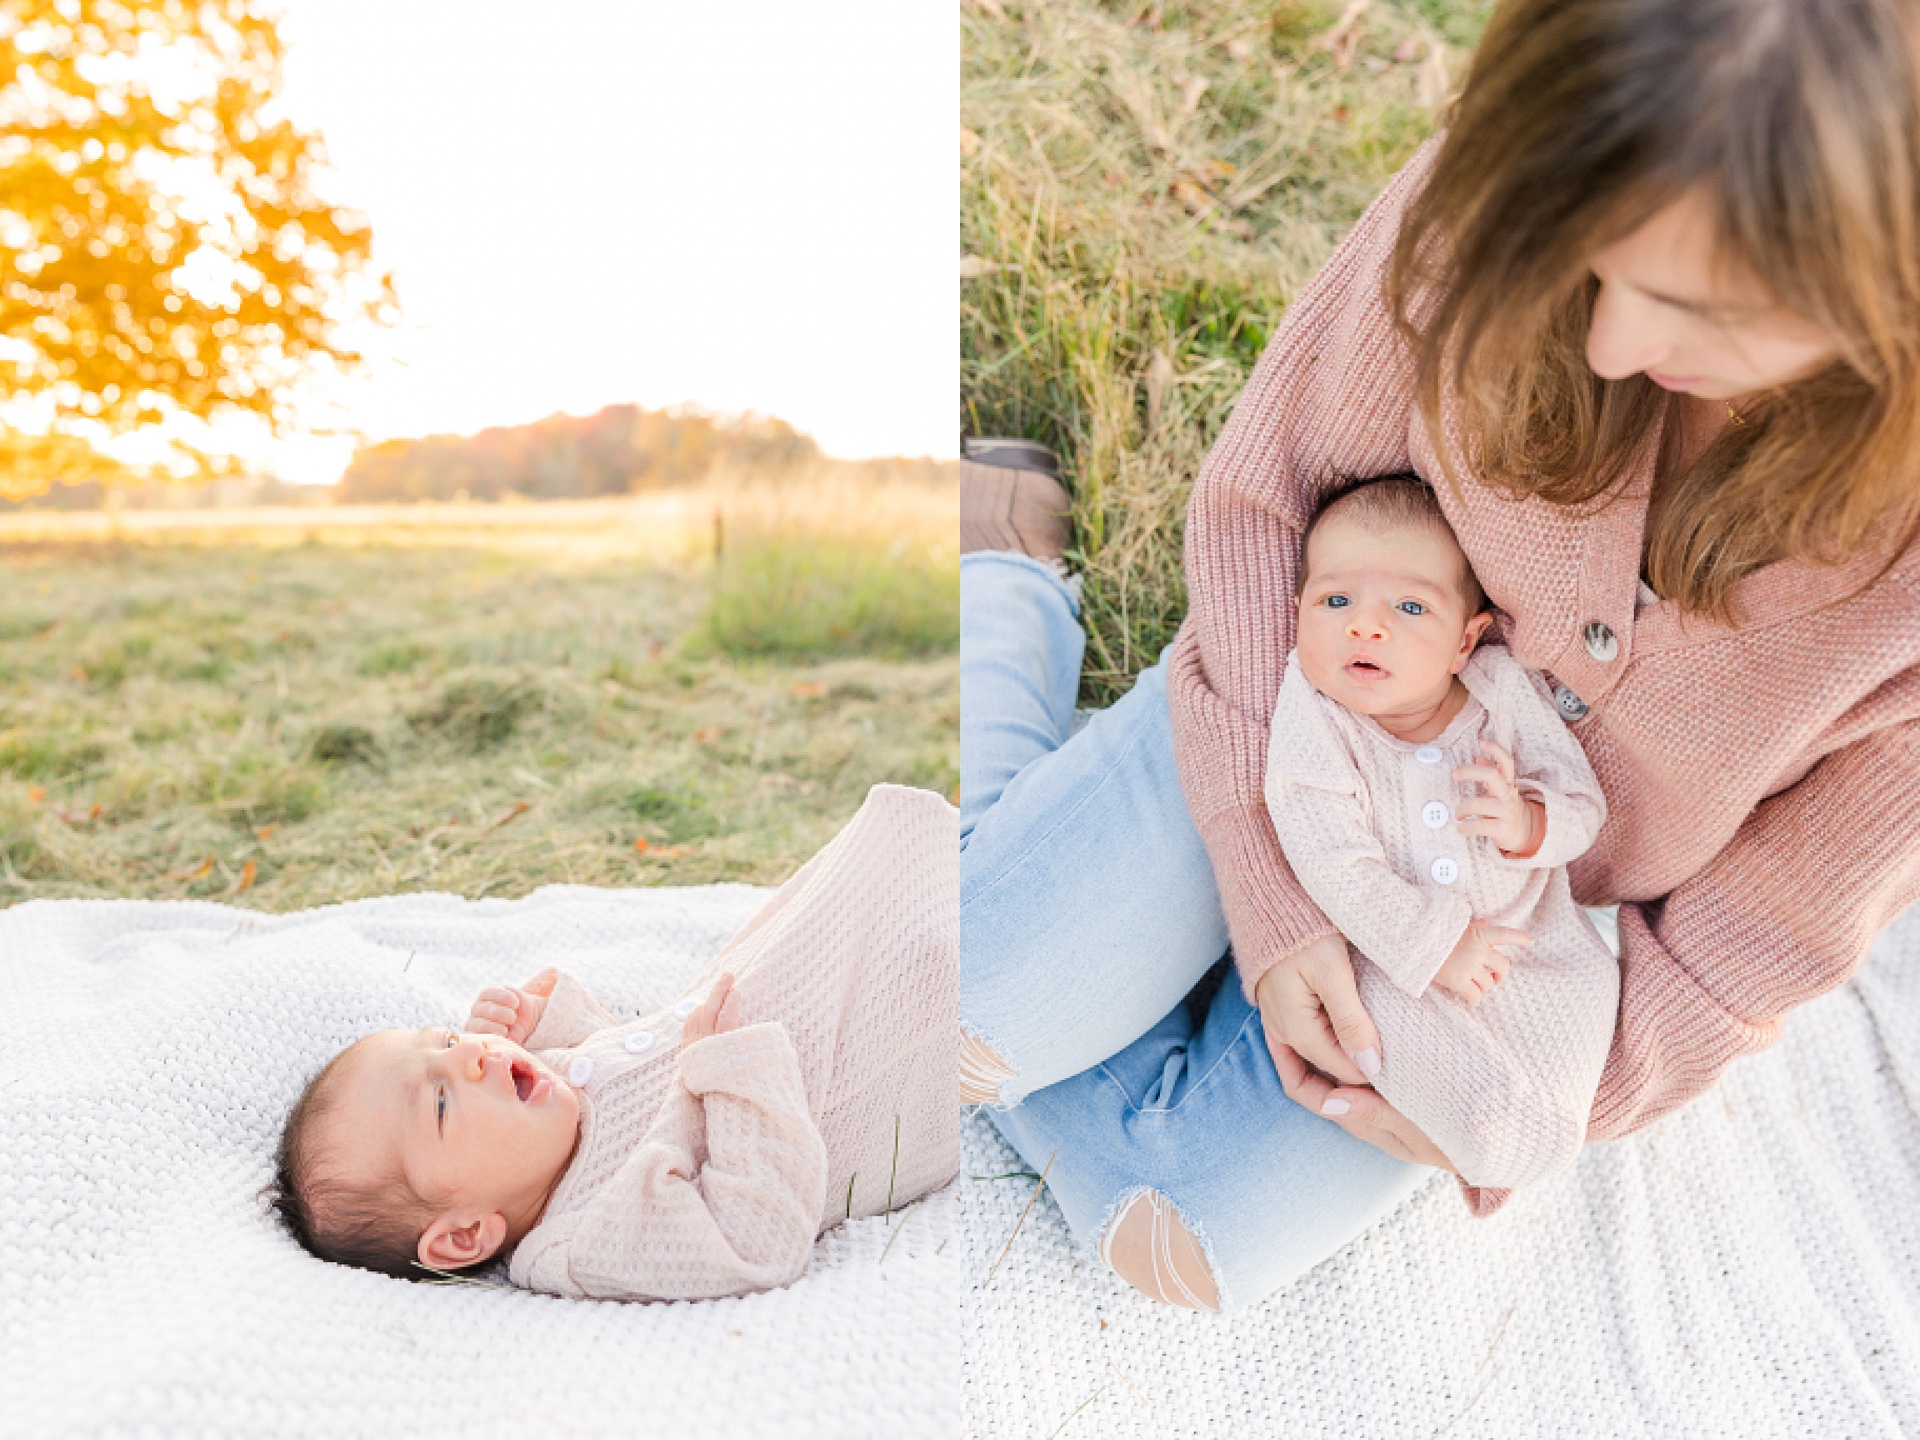 Fall foliage outdoor newborn photo session in Wayland Massachusetts with Sara Sniderman Photography